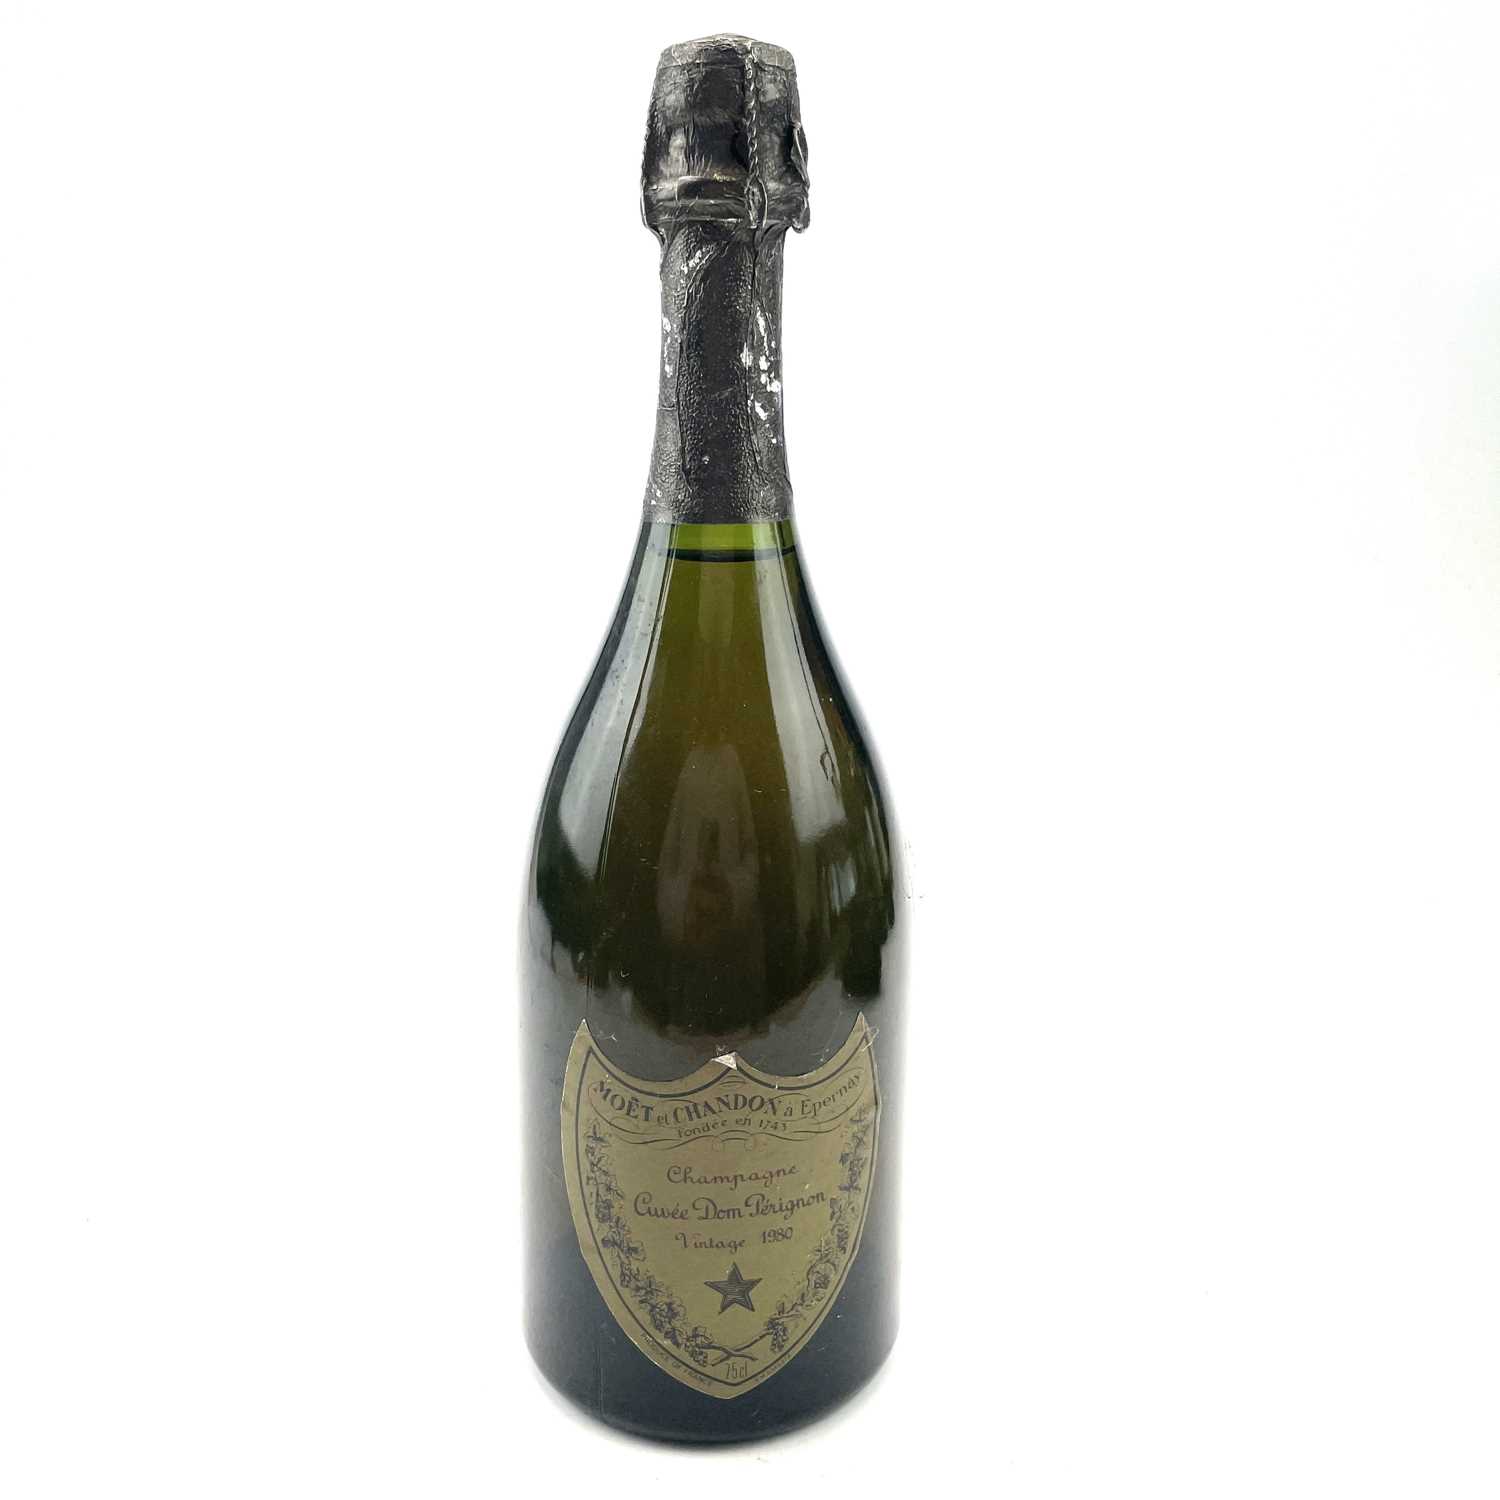 A bottle of Moet Chandon Cuvee Dom Perigion 1980 vintage champagne.